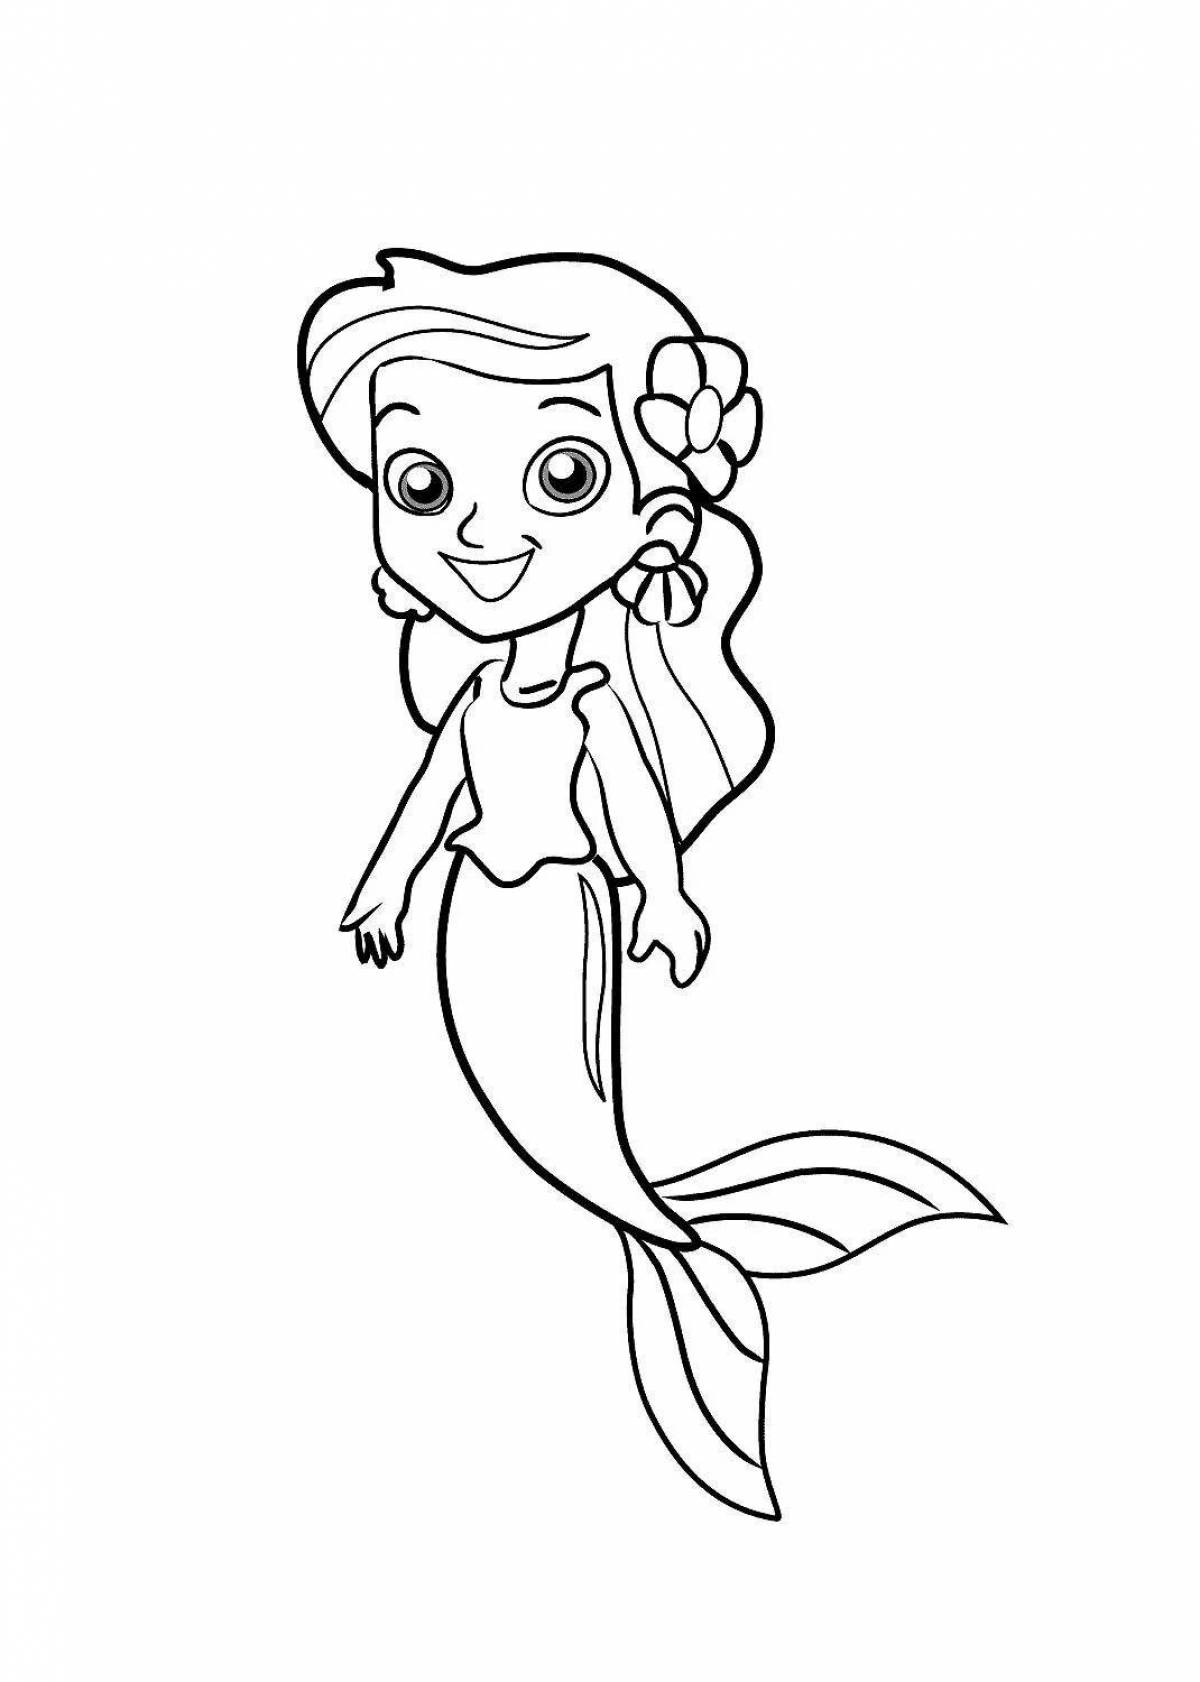 Merry little mermaid coloring book